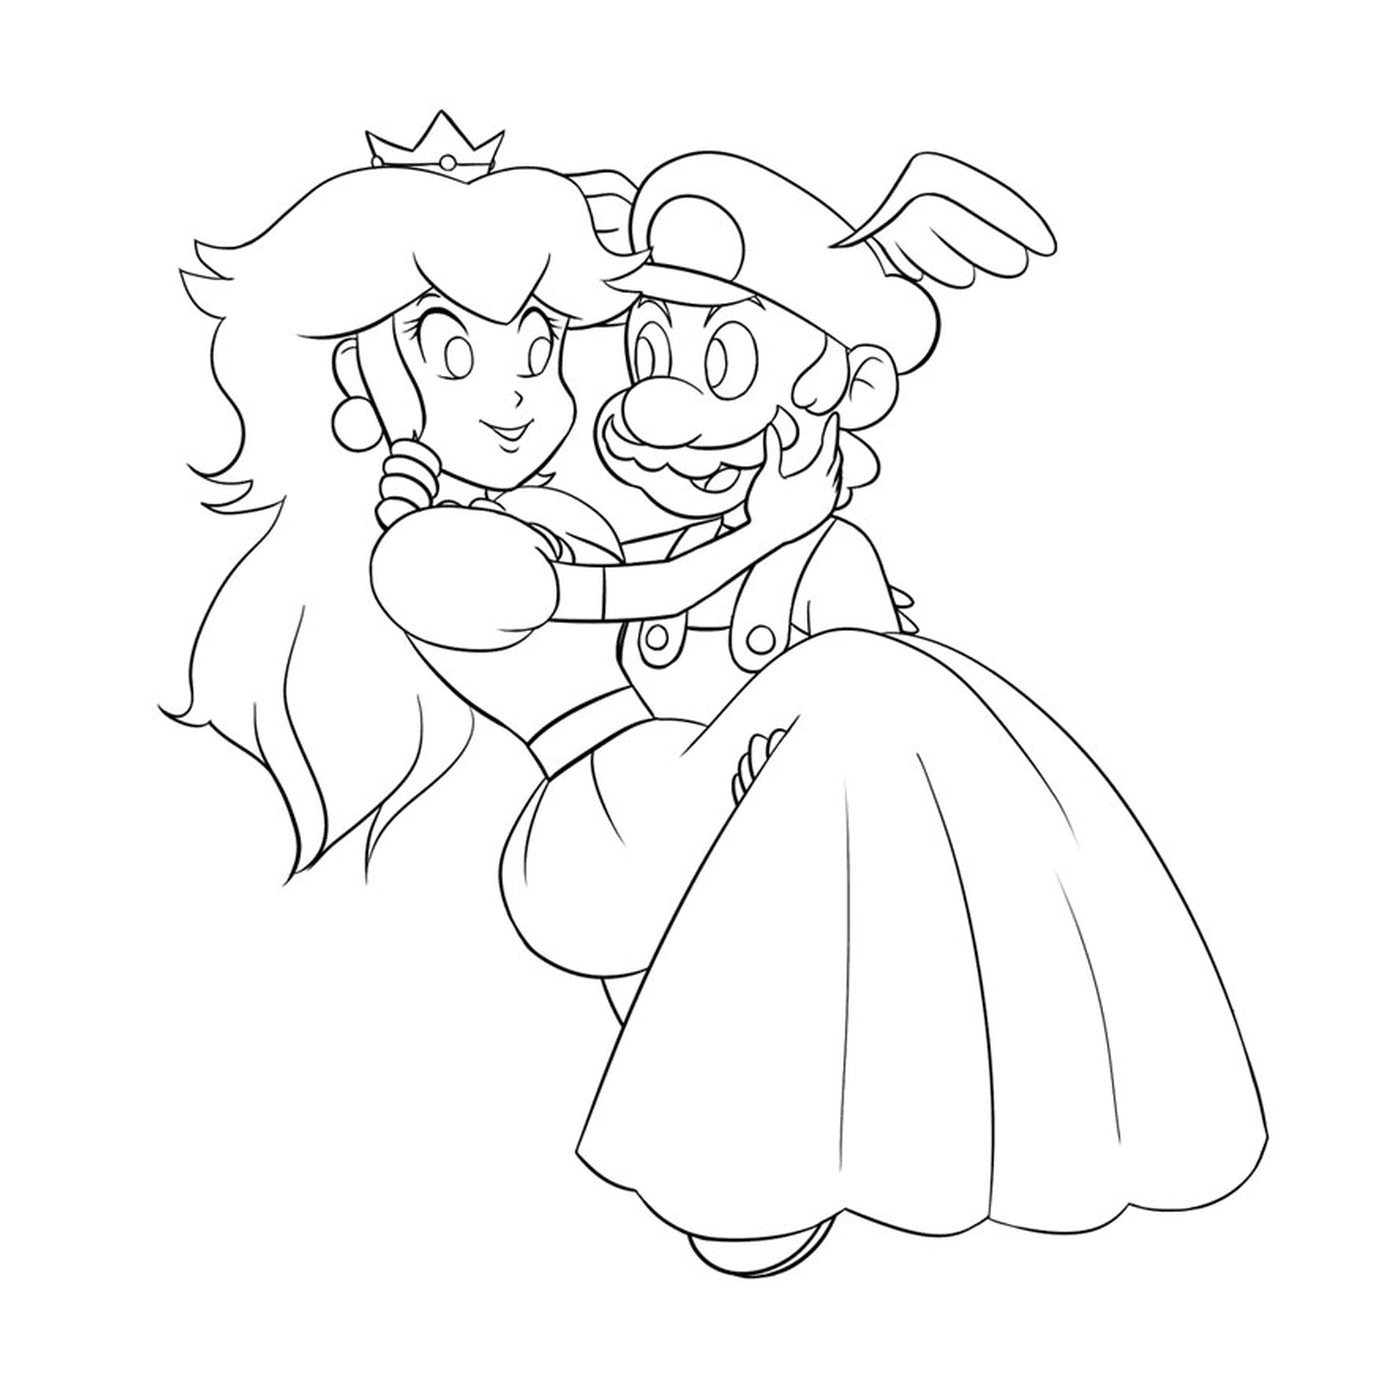   Mario et la princesse 